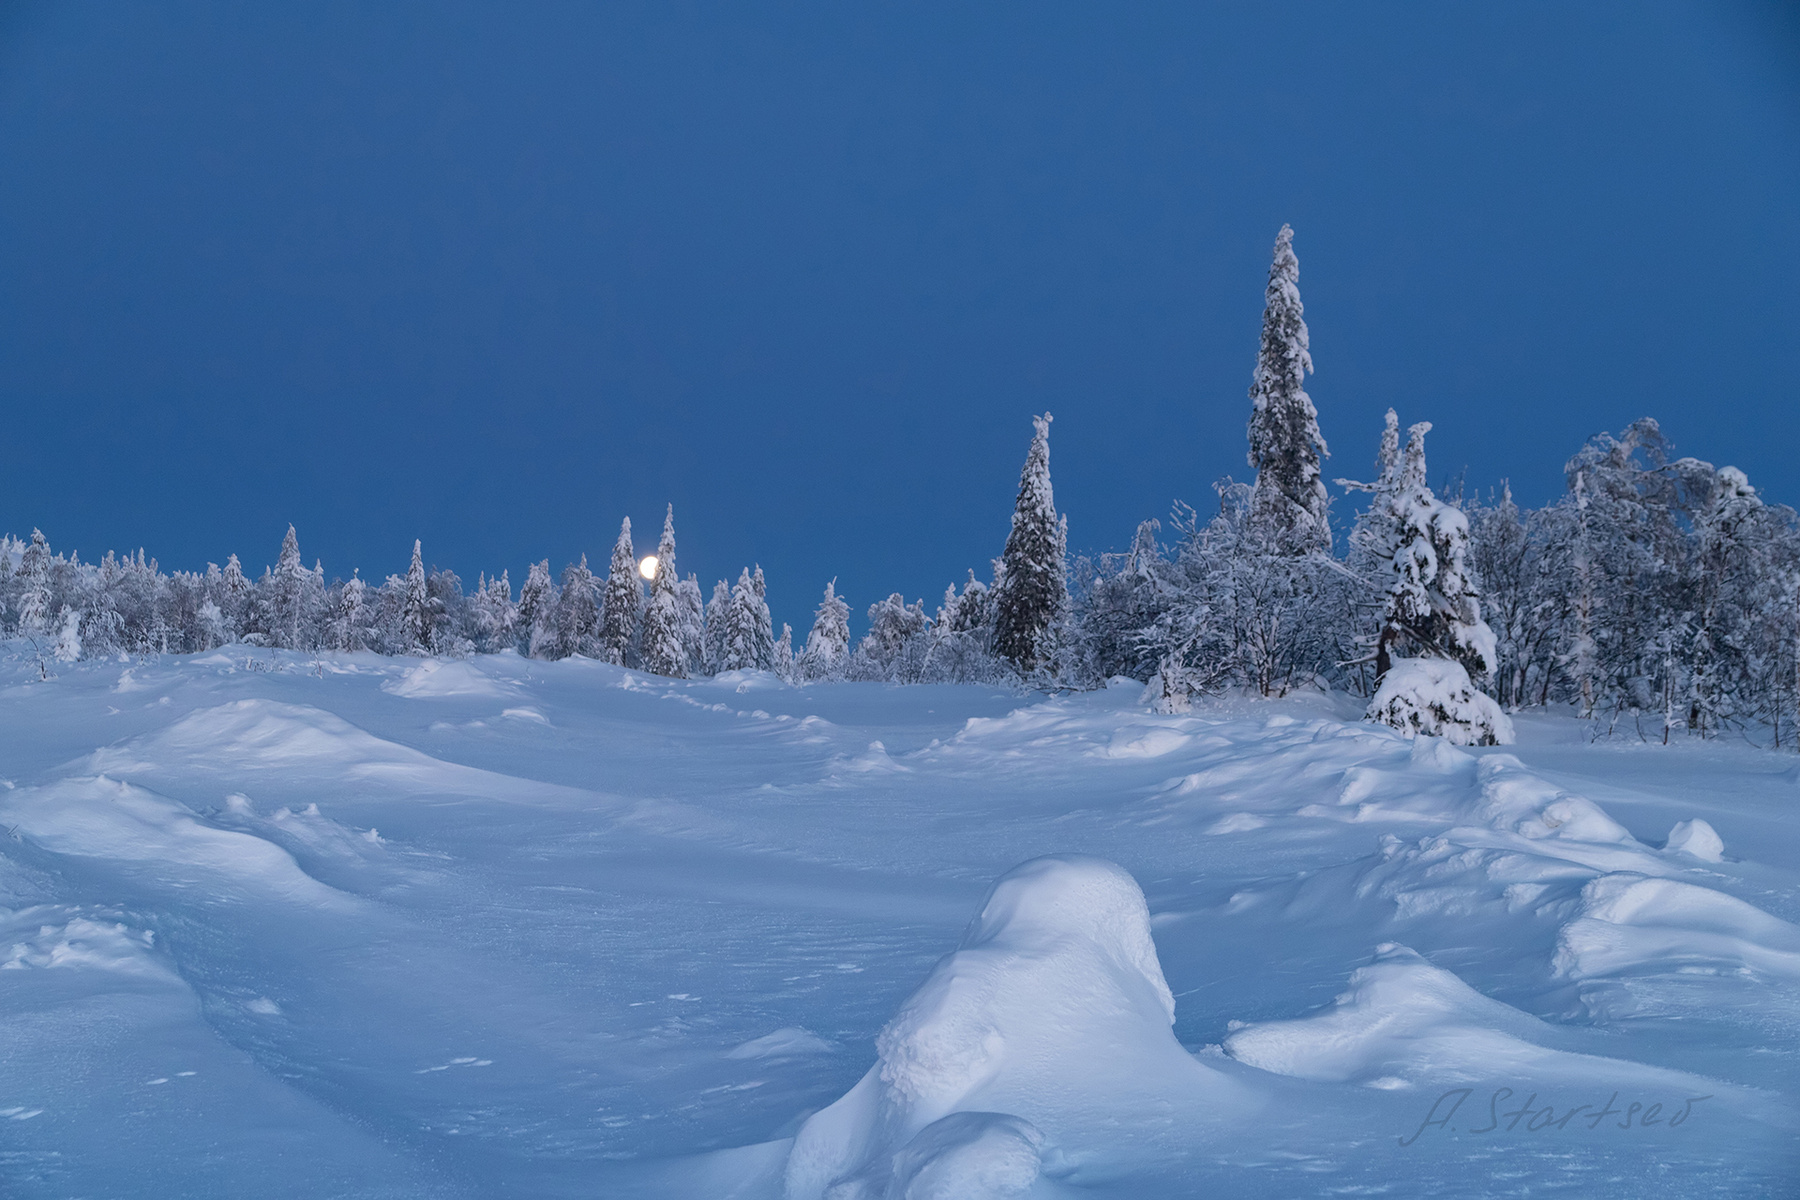 Луна над зимним лесом утро Урал туризм снег природа Пермский_край пейзаж луна лес зима деревья